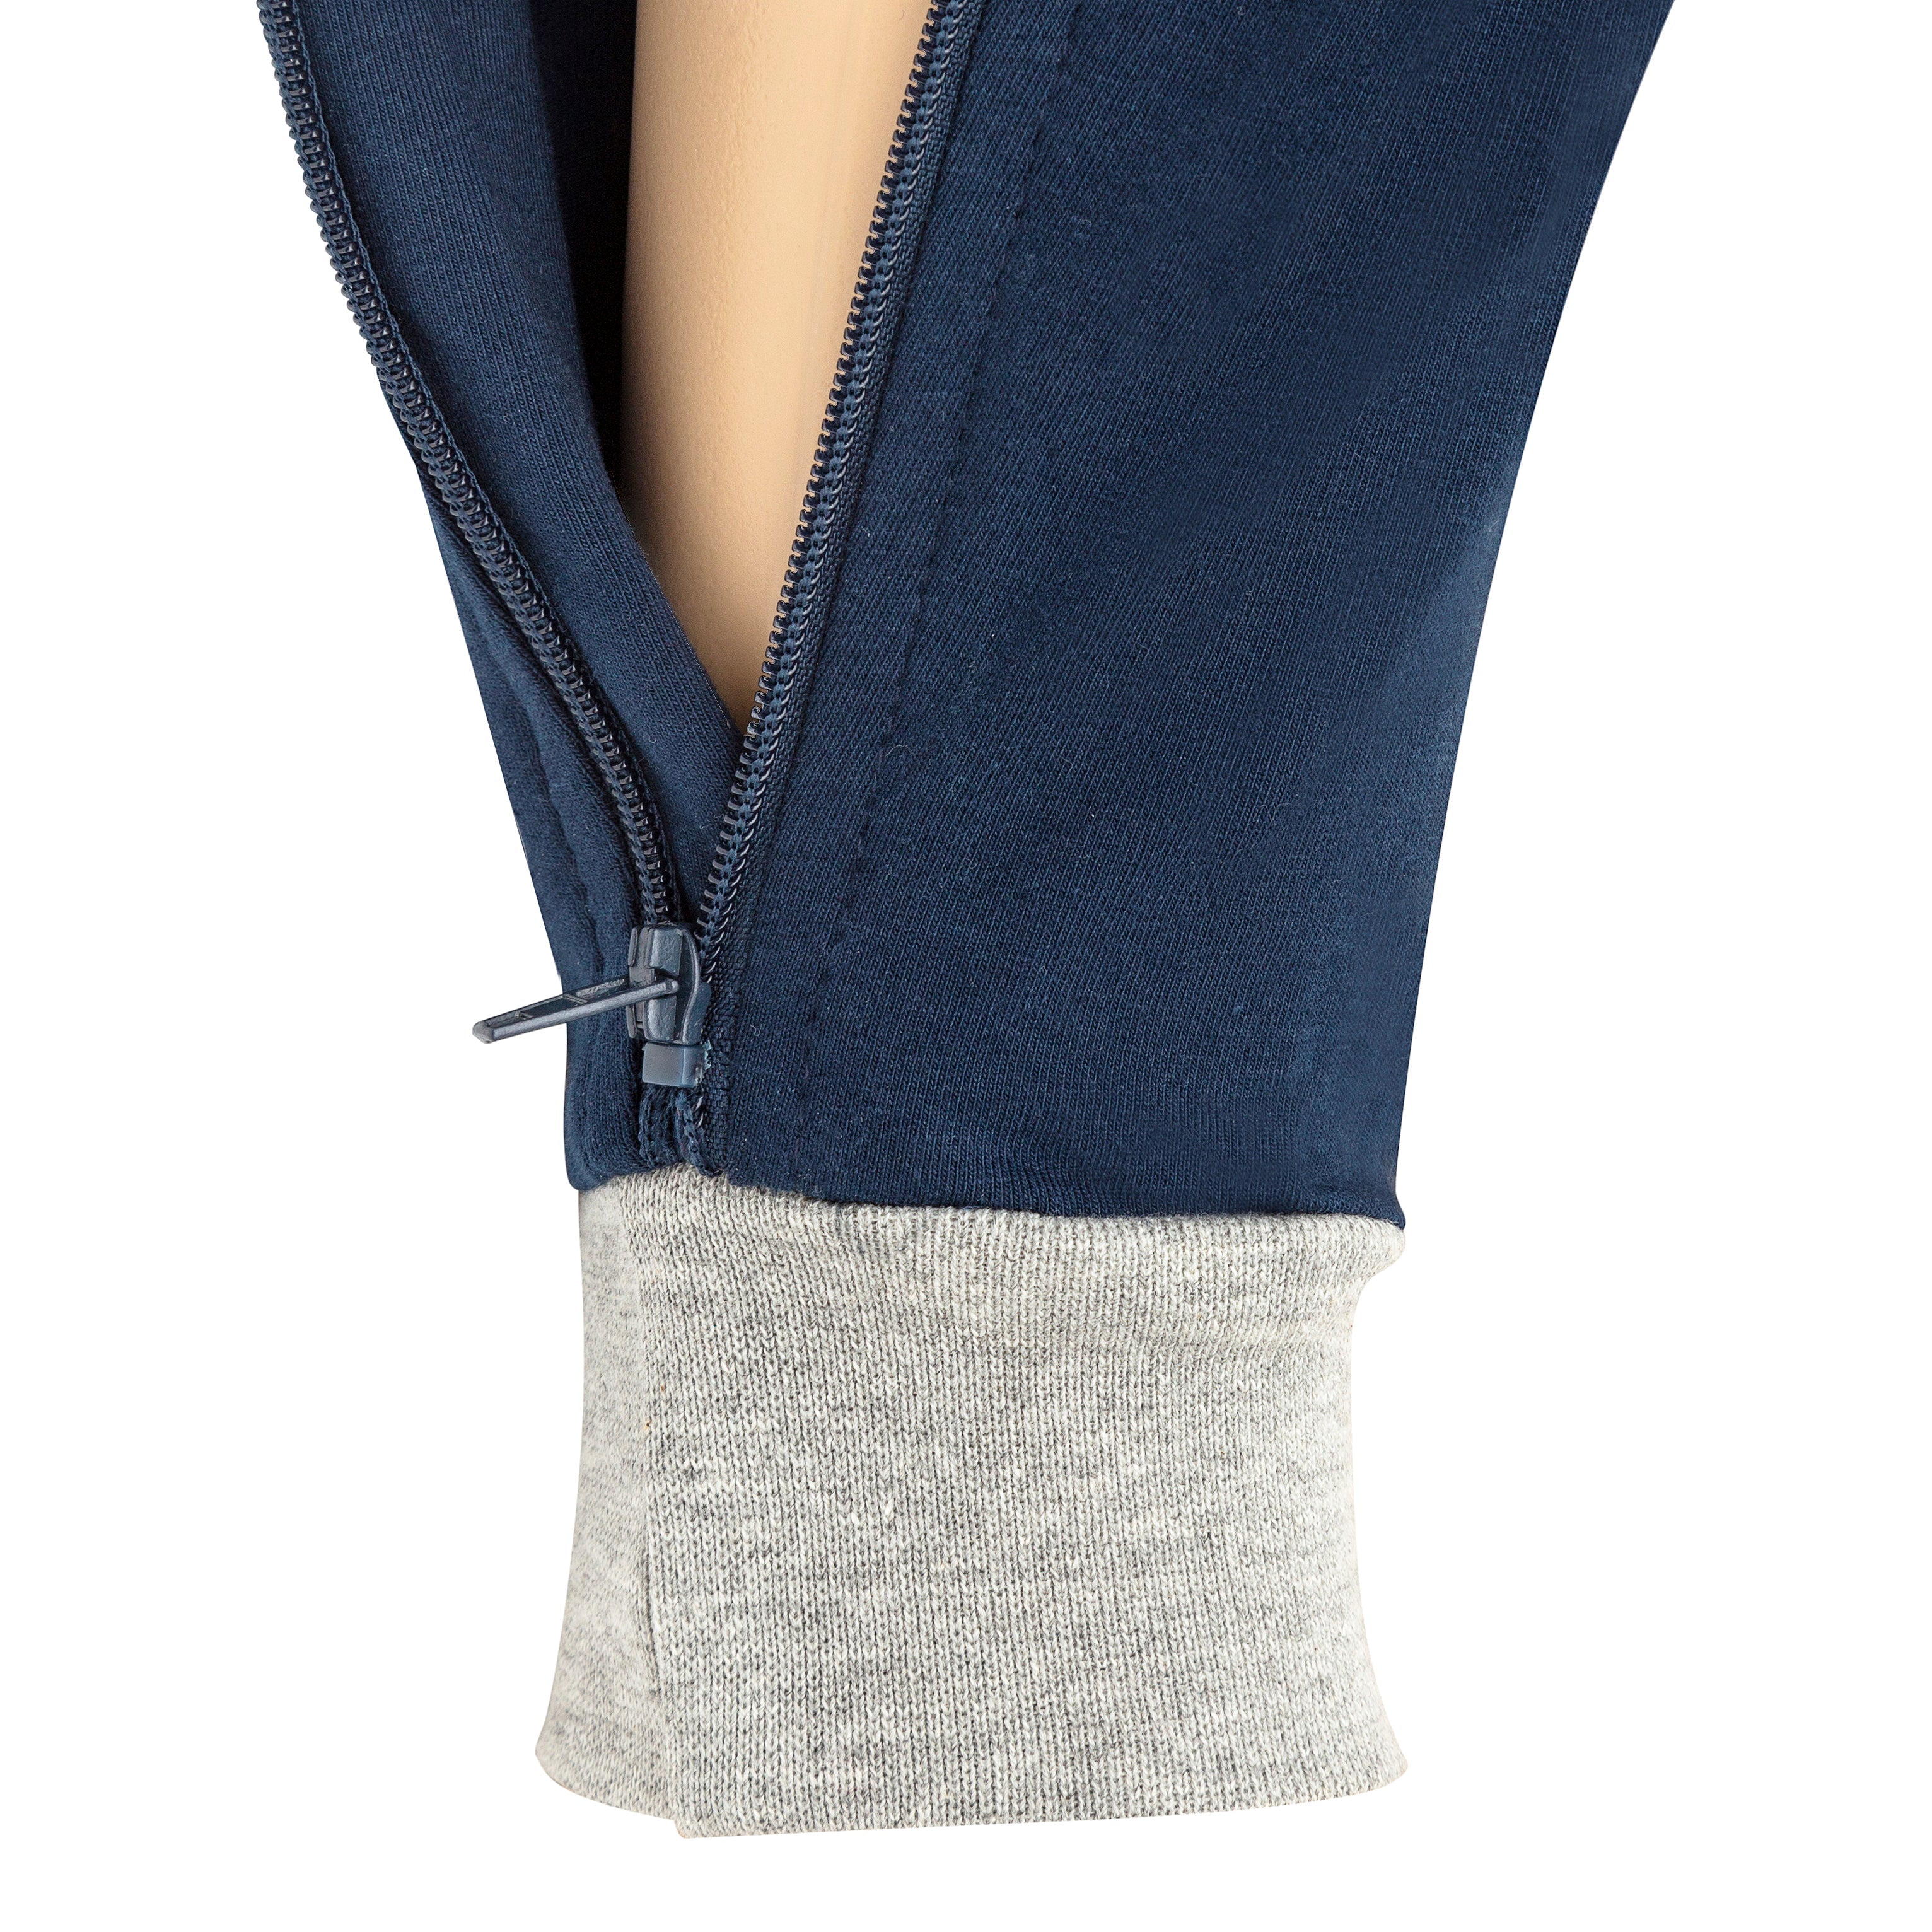 KayCey®Z Secret Zip Back Jumpsuits - Short Sleeve / Ankle Length (ADULTS)